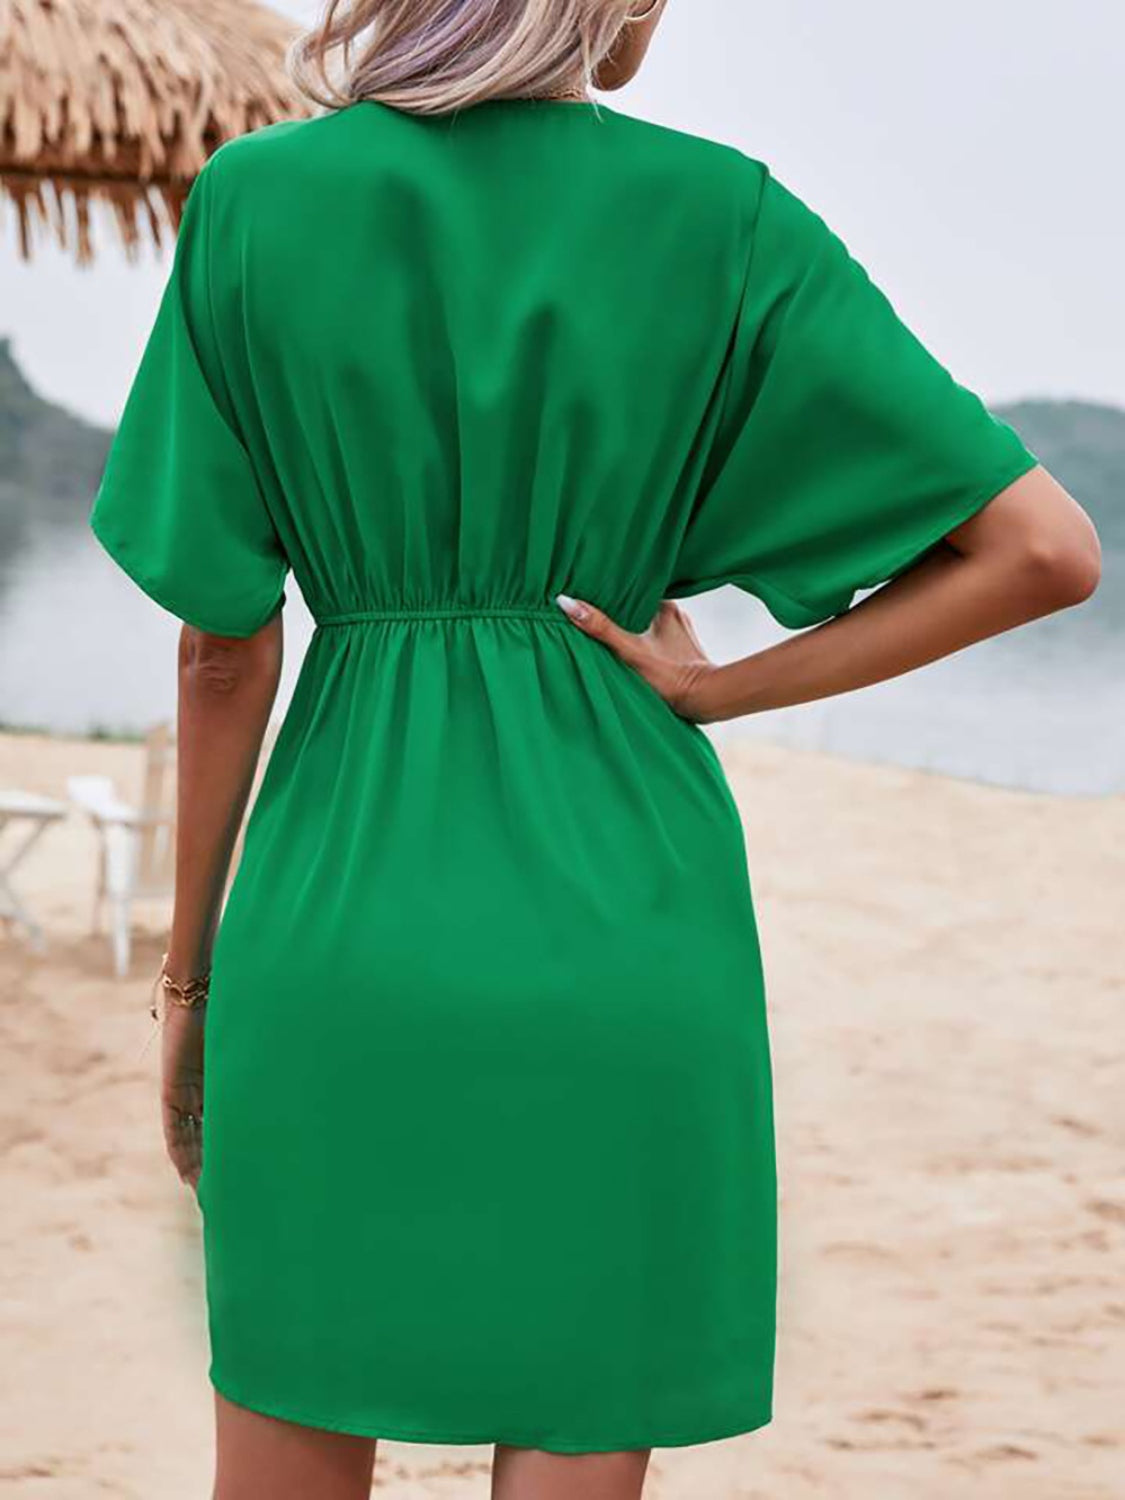 Plunge Neck Mini Dress | Plunging Neckline Short Dress with Sleeves.